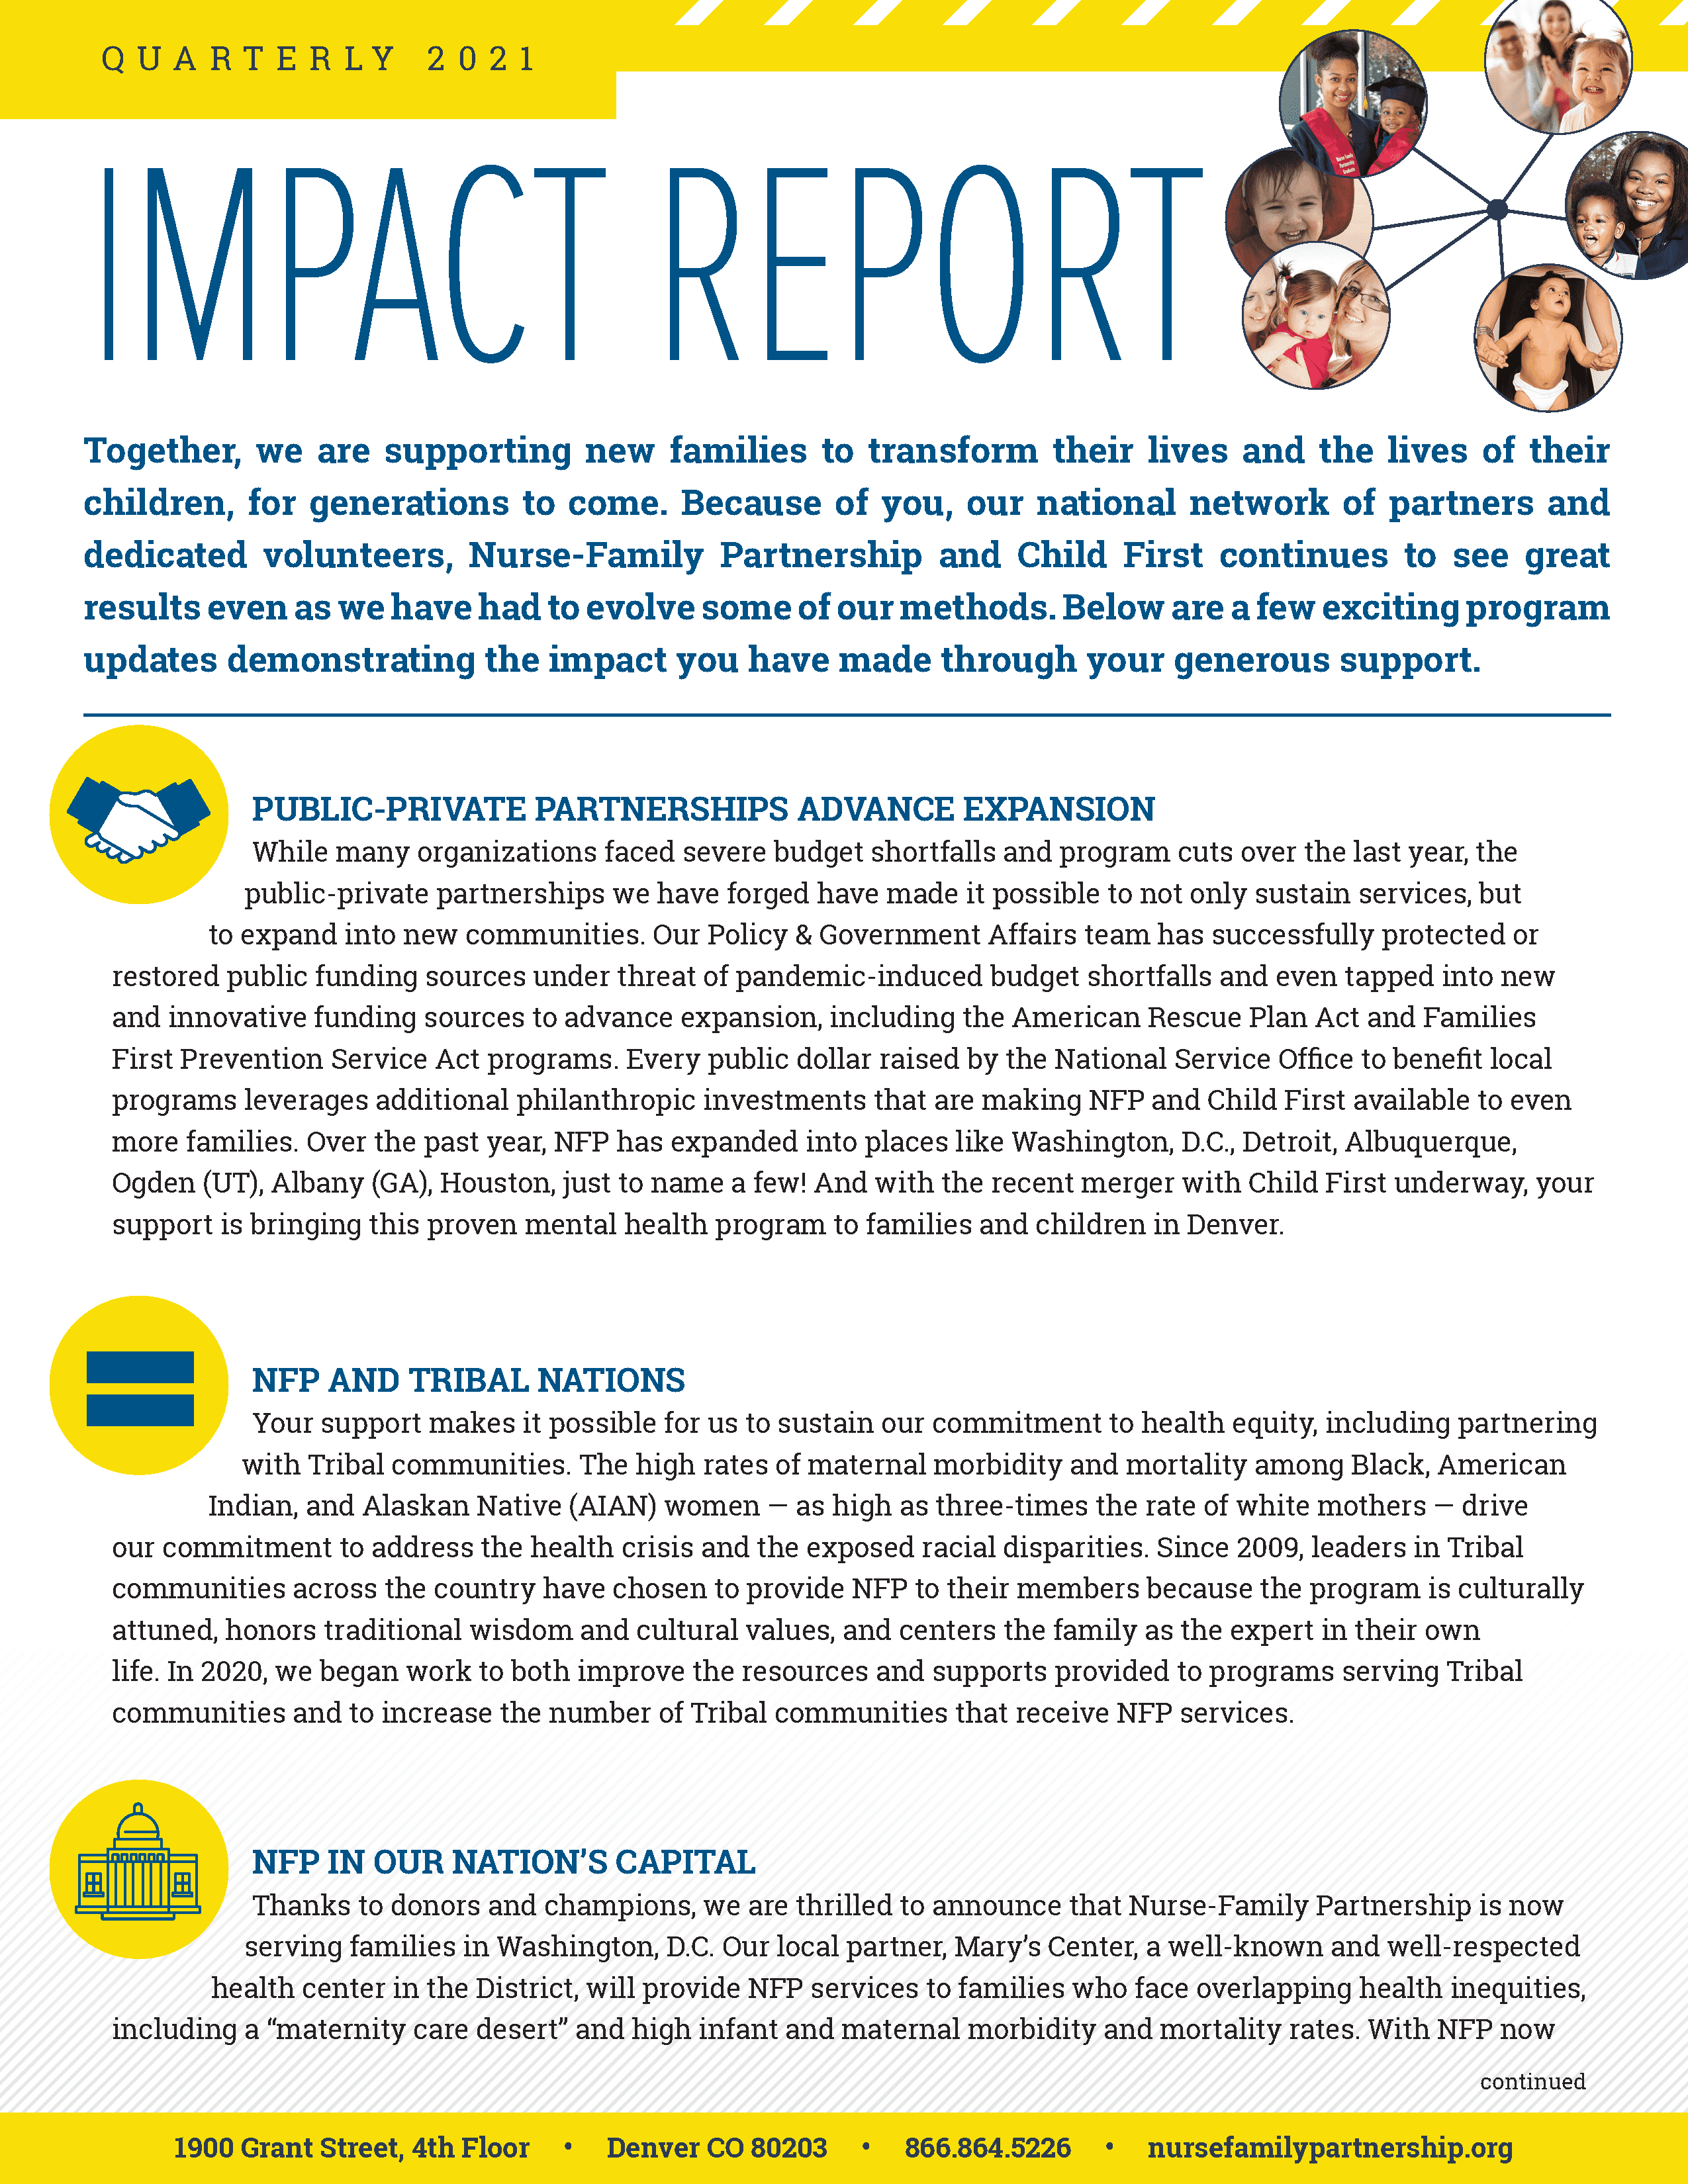 Quarter Four Impact Report